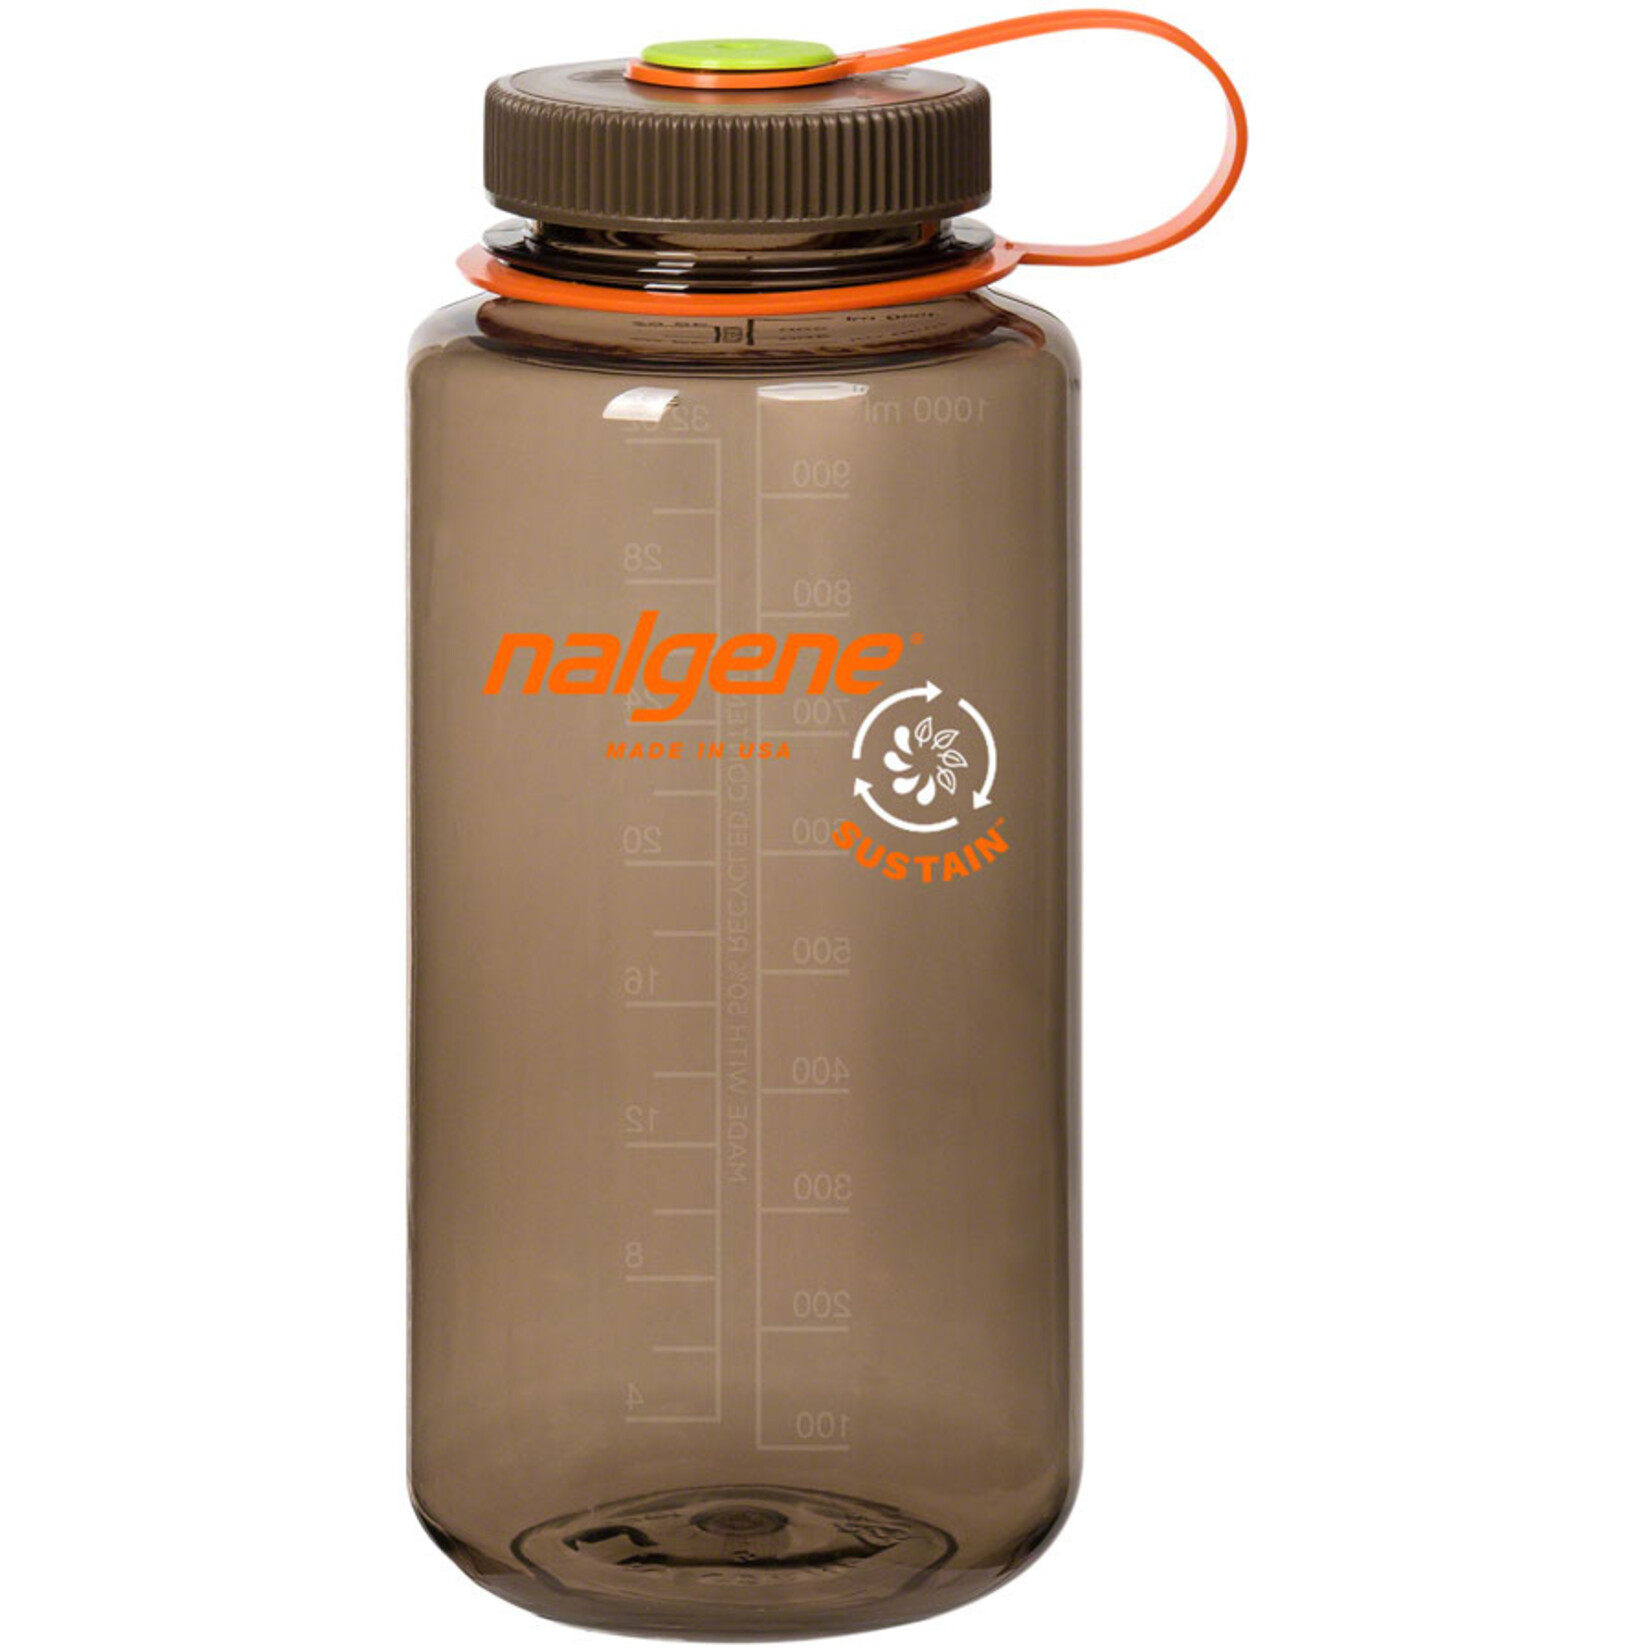 Nalgene Nalgene Sustain Water Bottle - 32oz Wide Mouth